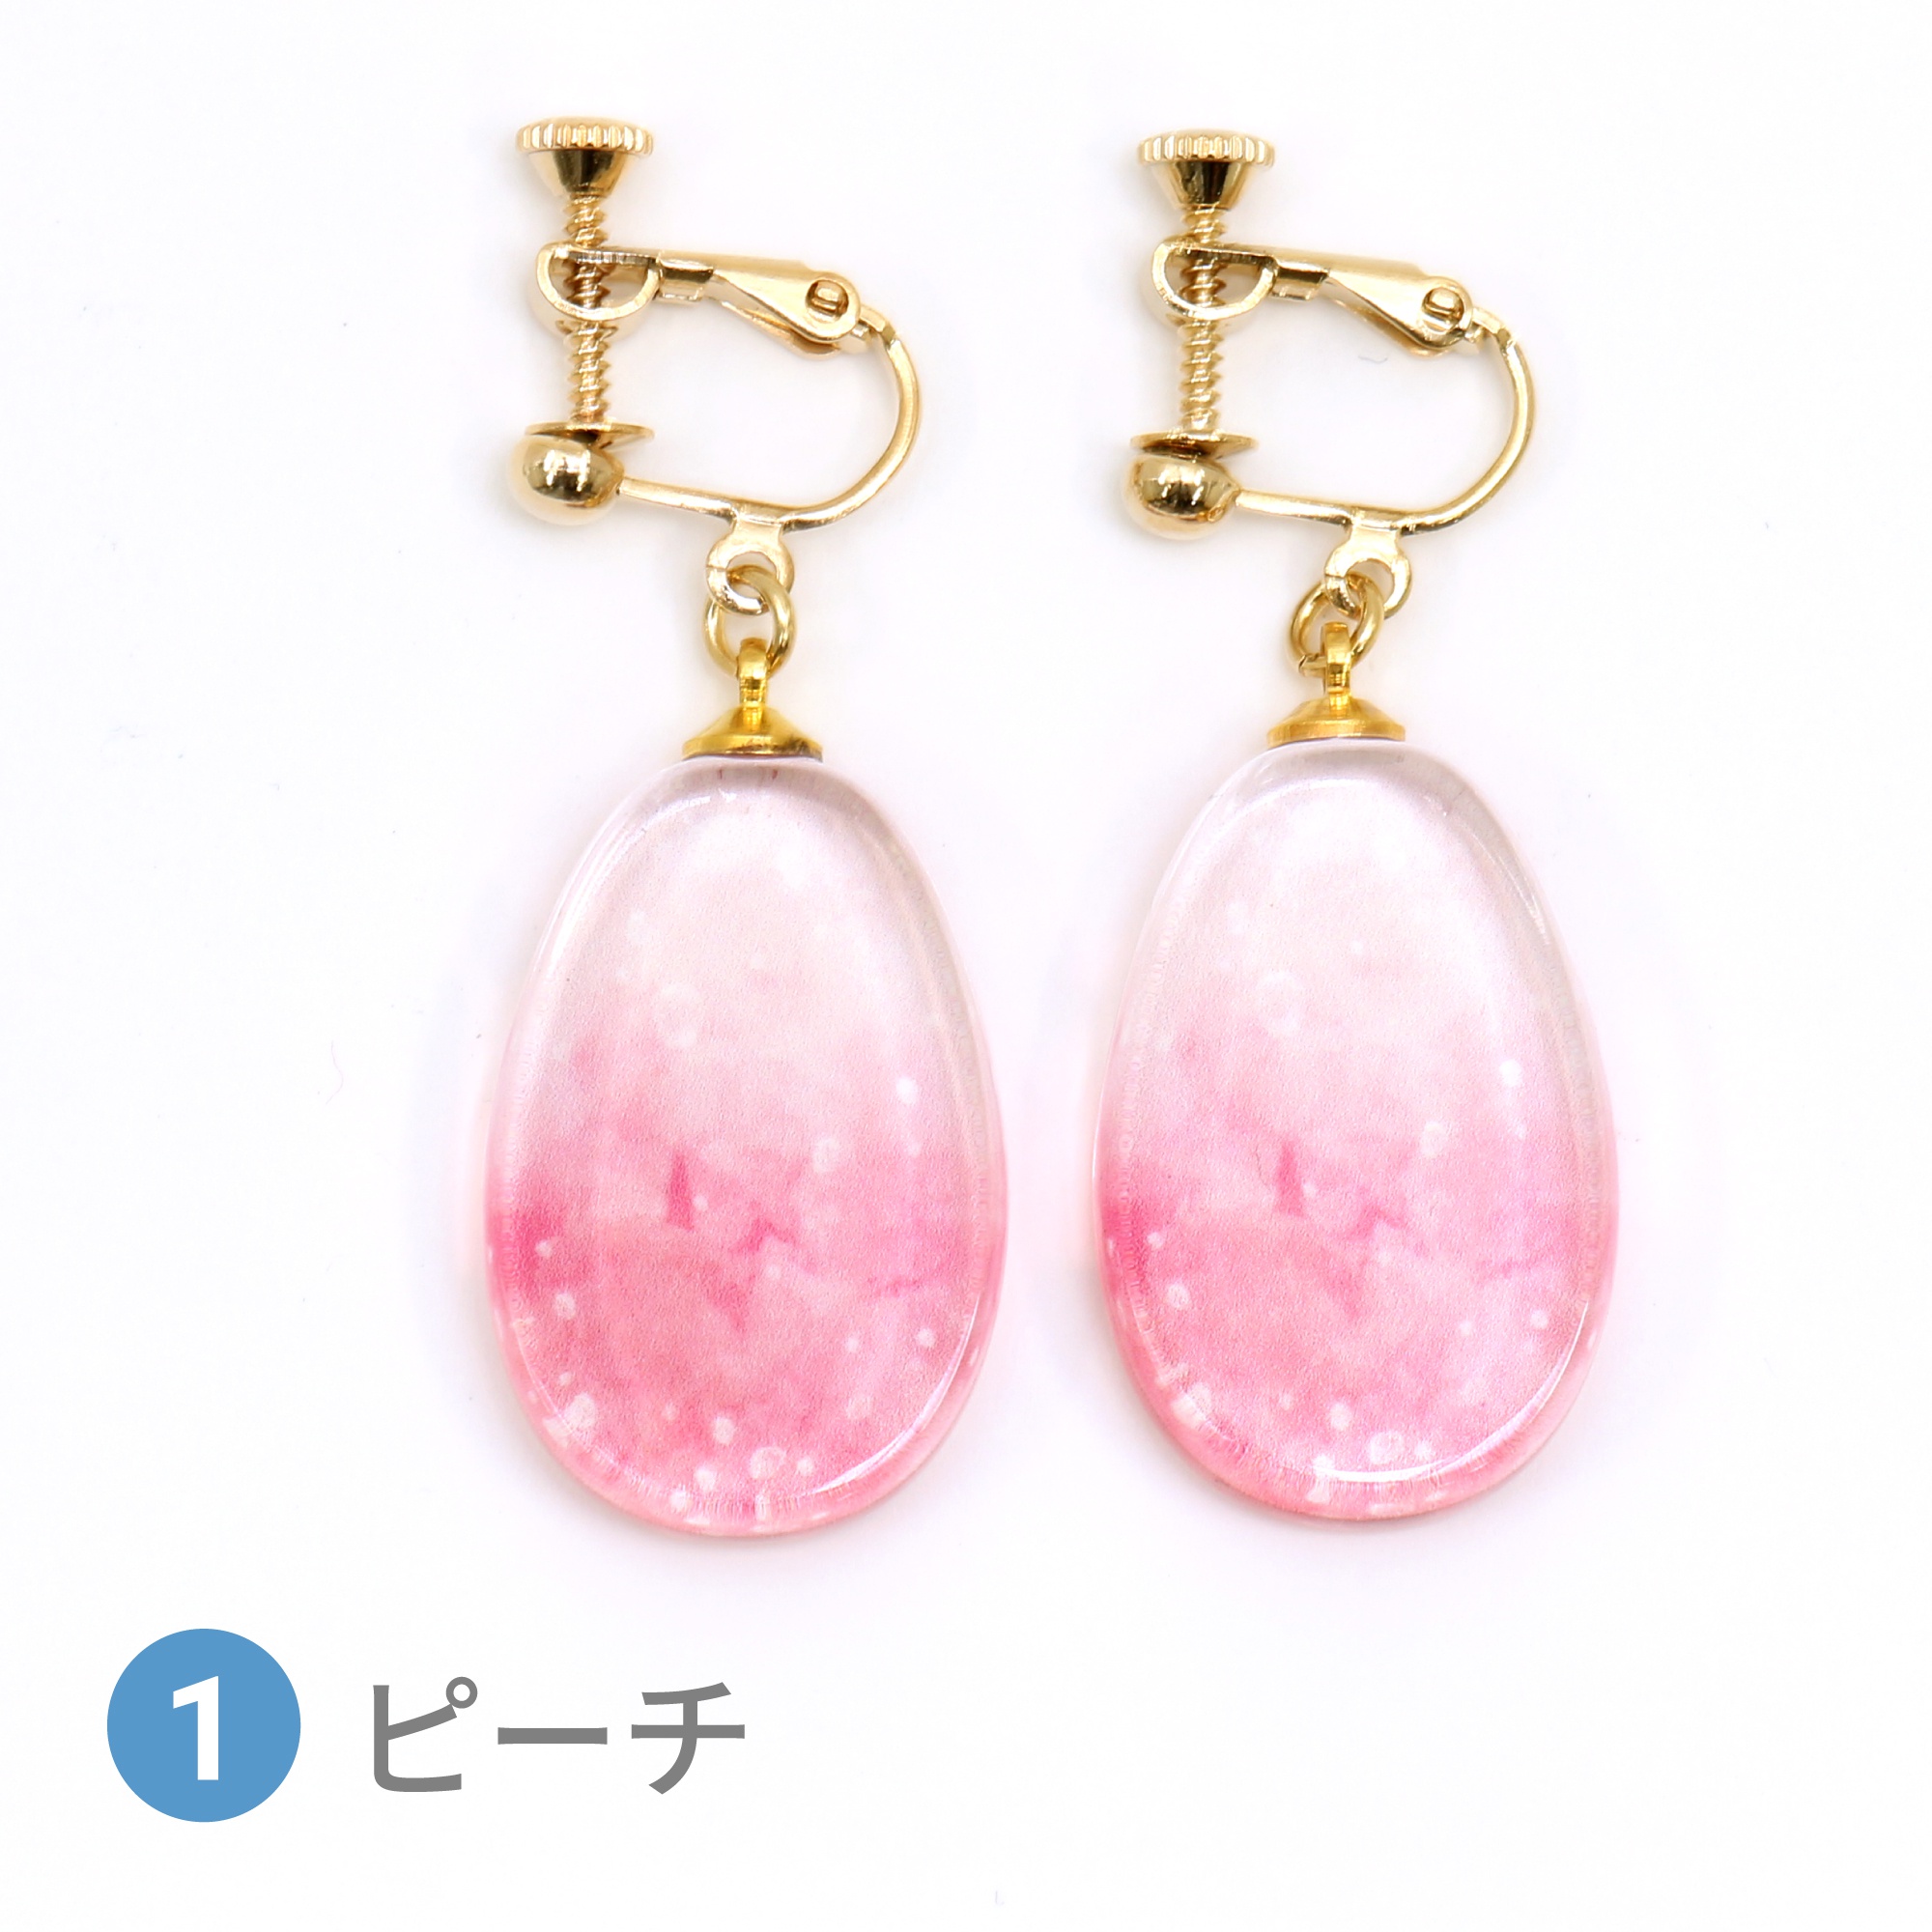 Glass accessories Earring SODA peach drop shape